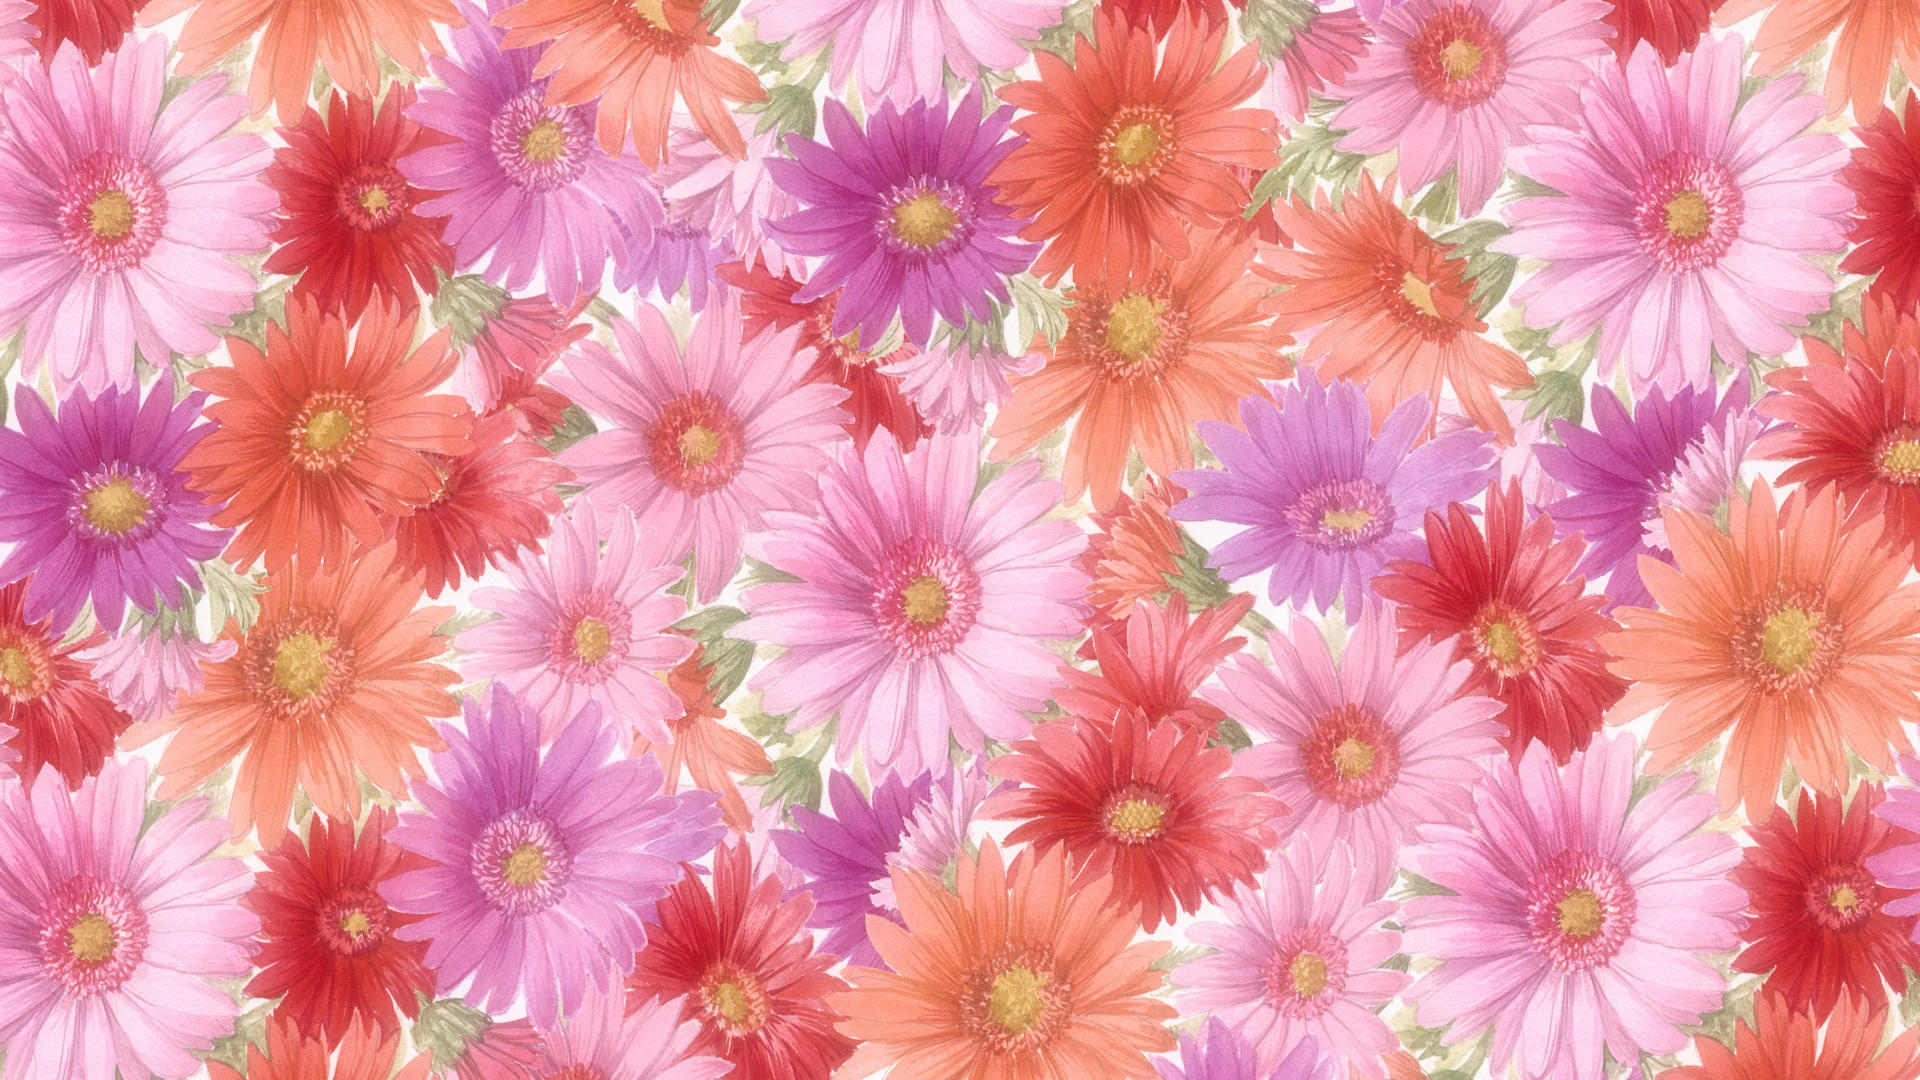 71+] Flower Background Pictures - WallpaperSafari